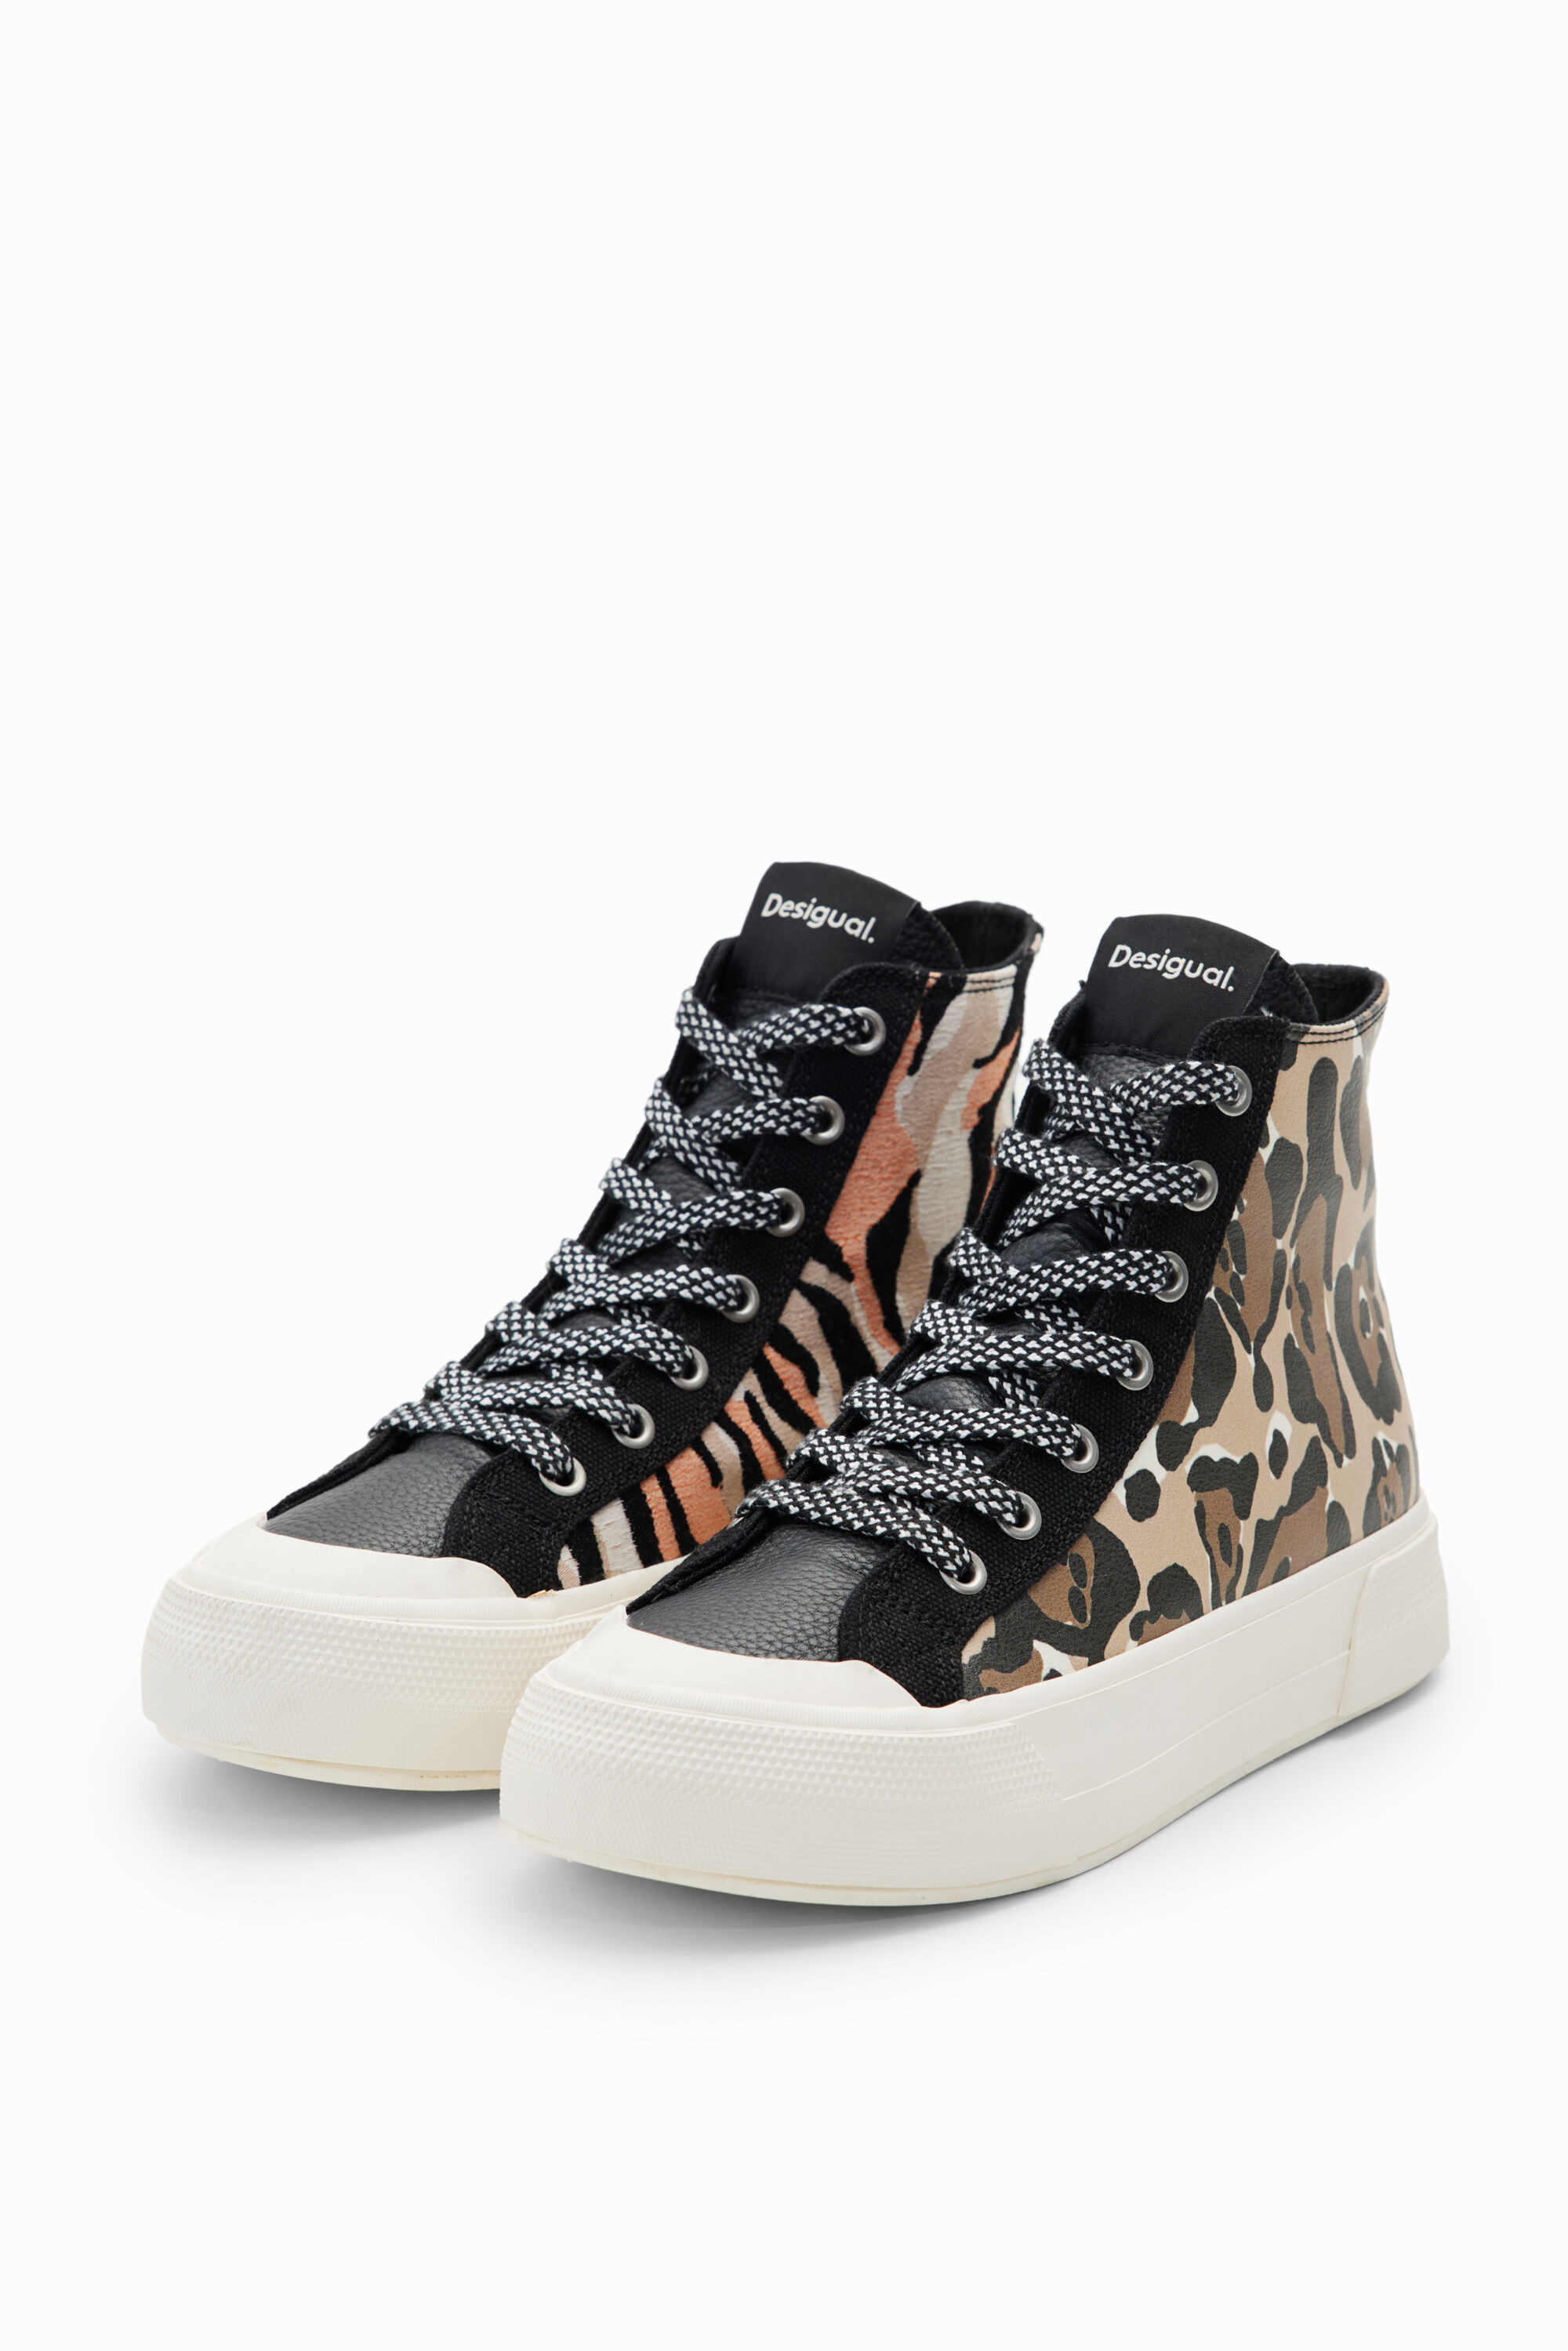 Black Zebra Women's Sneakers, Striped Animal Print Designer High-top  Fashion Tennis Shoes | Heidikimurart Limited